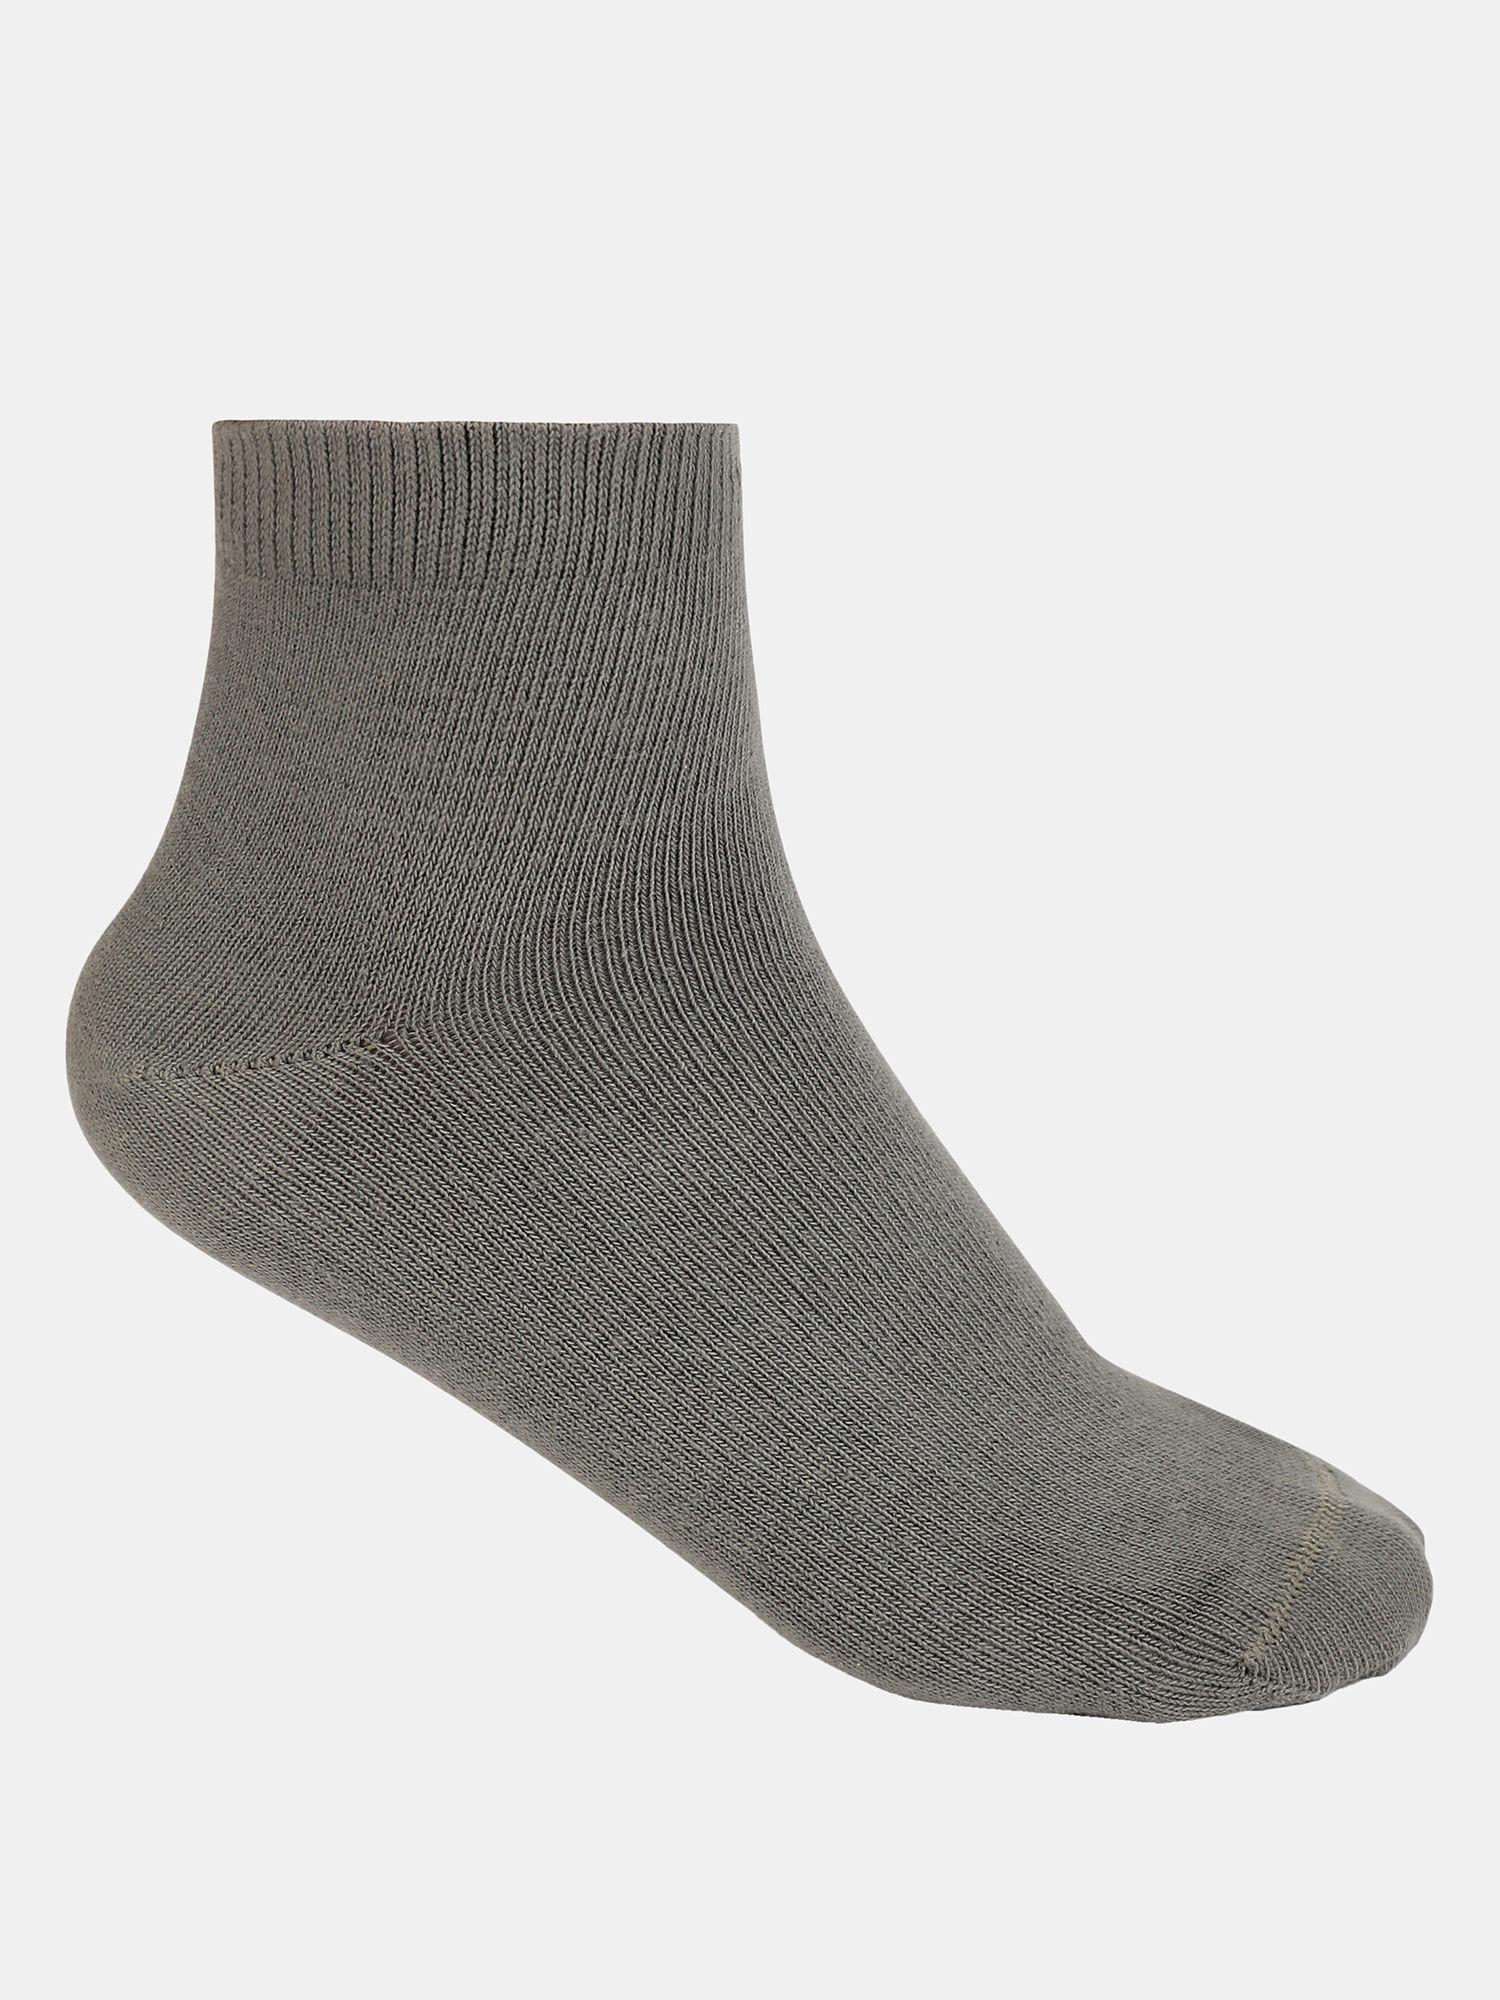 7801 unisex cotton nylon stretch ankle length socks - gunmetal grey